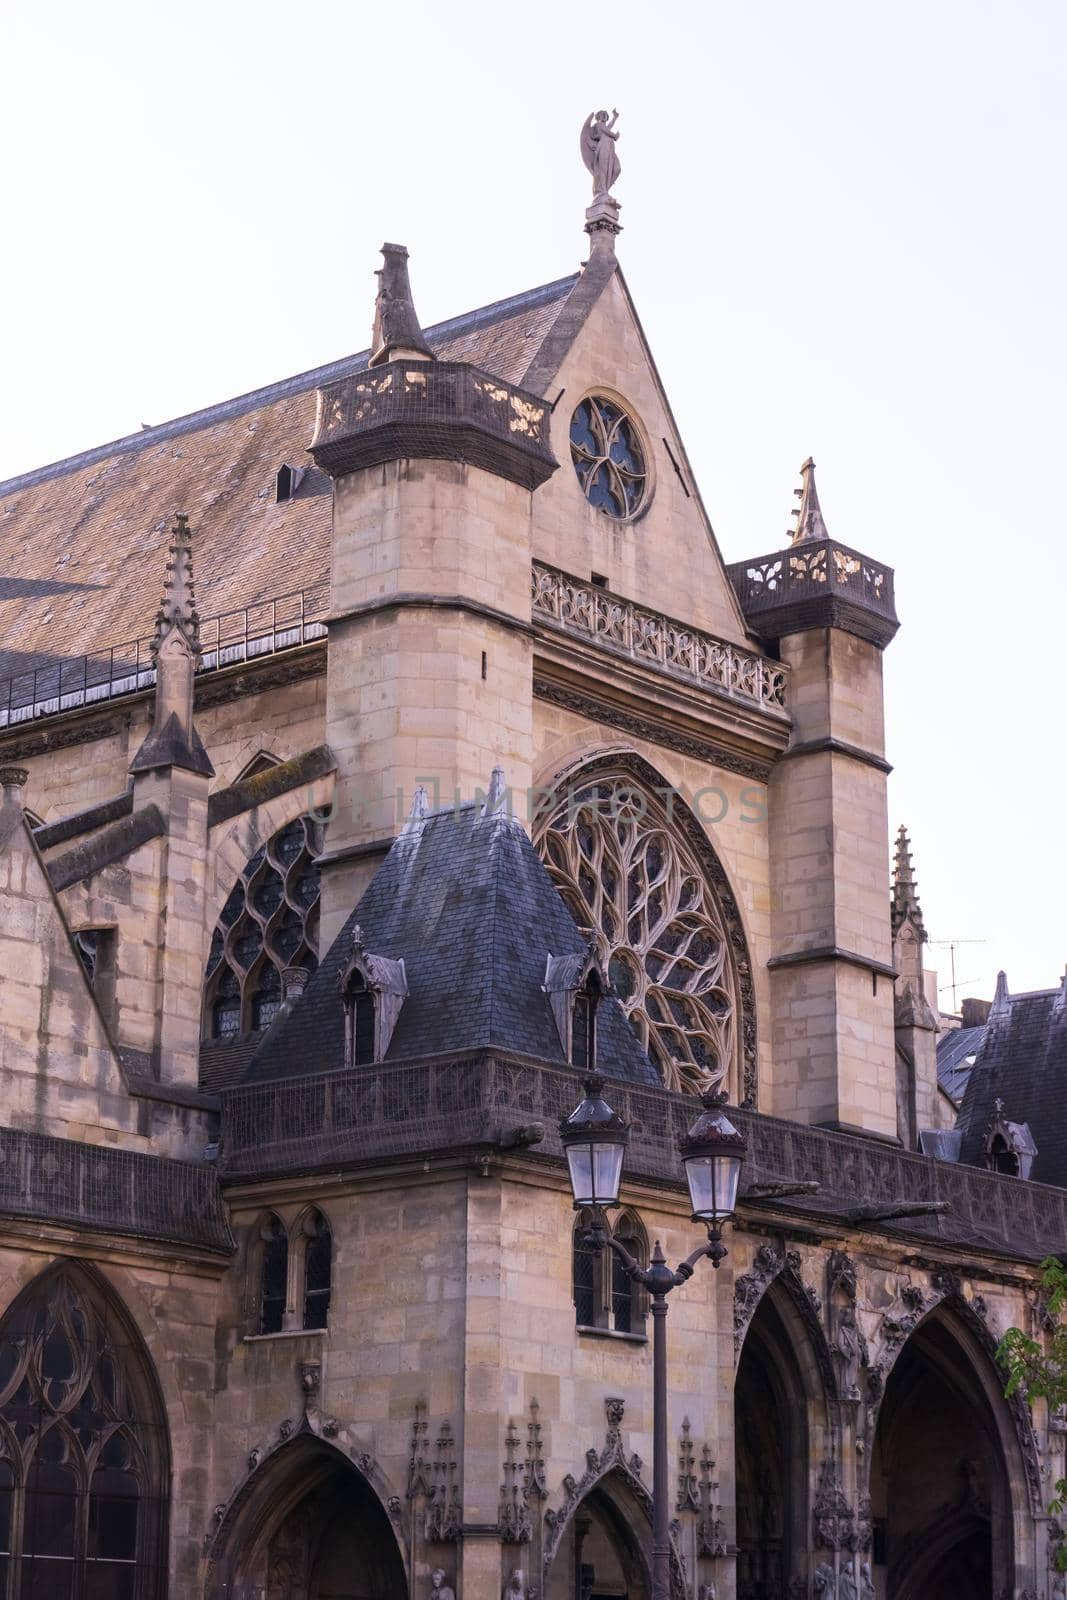 Catholic Church of Saint-Germain-l'Auxerrois in Paris, France